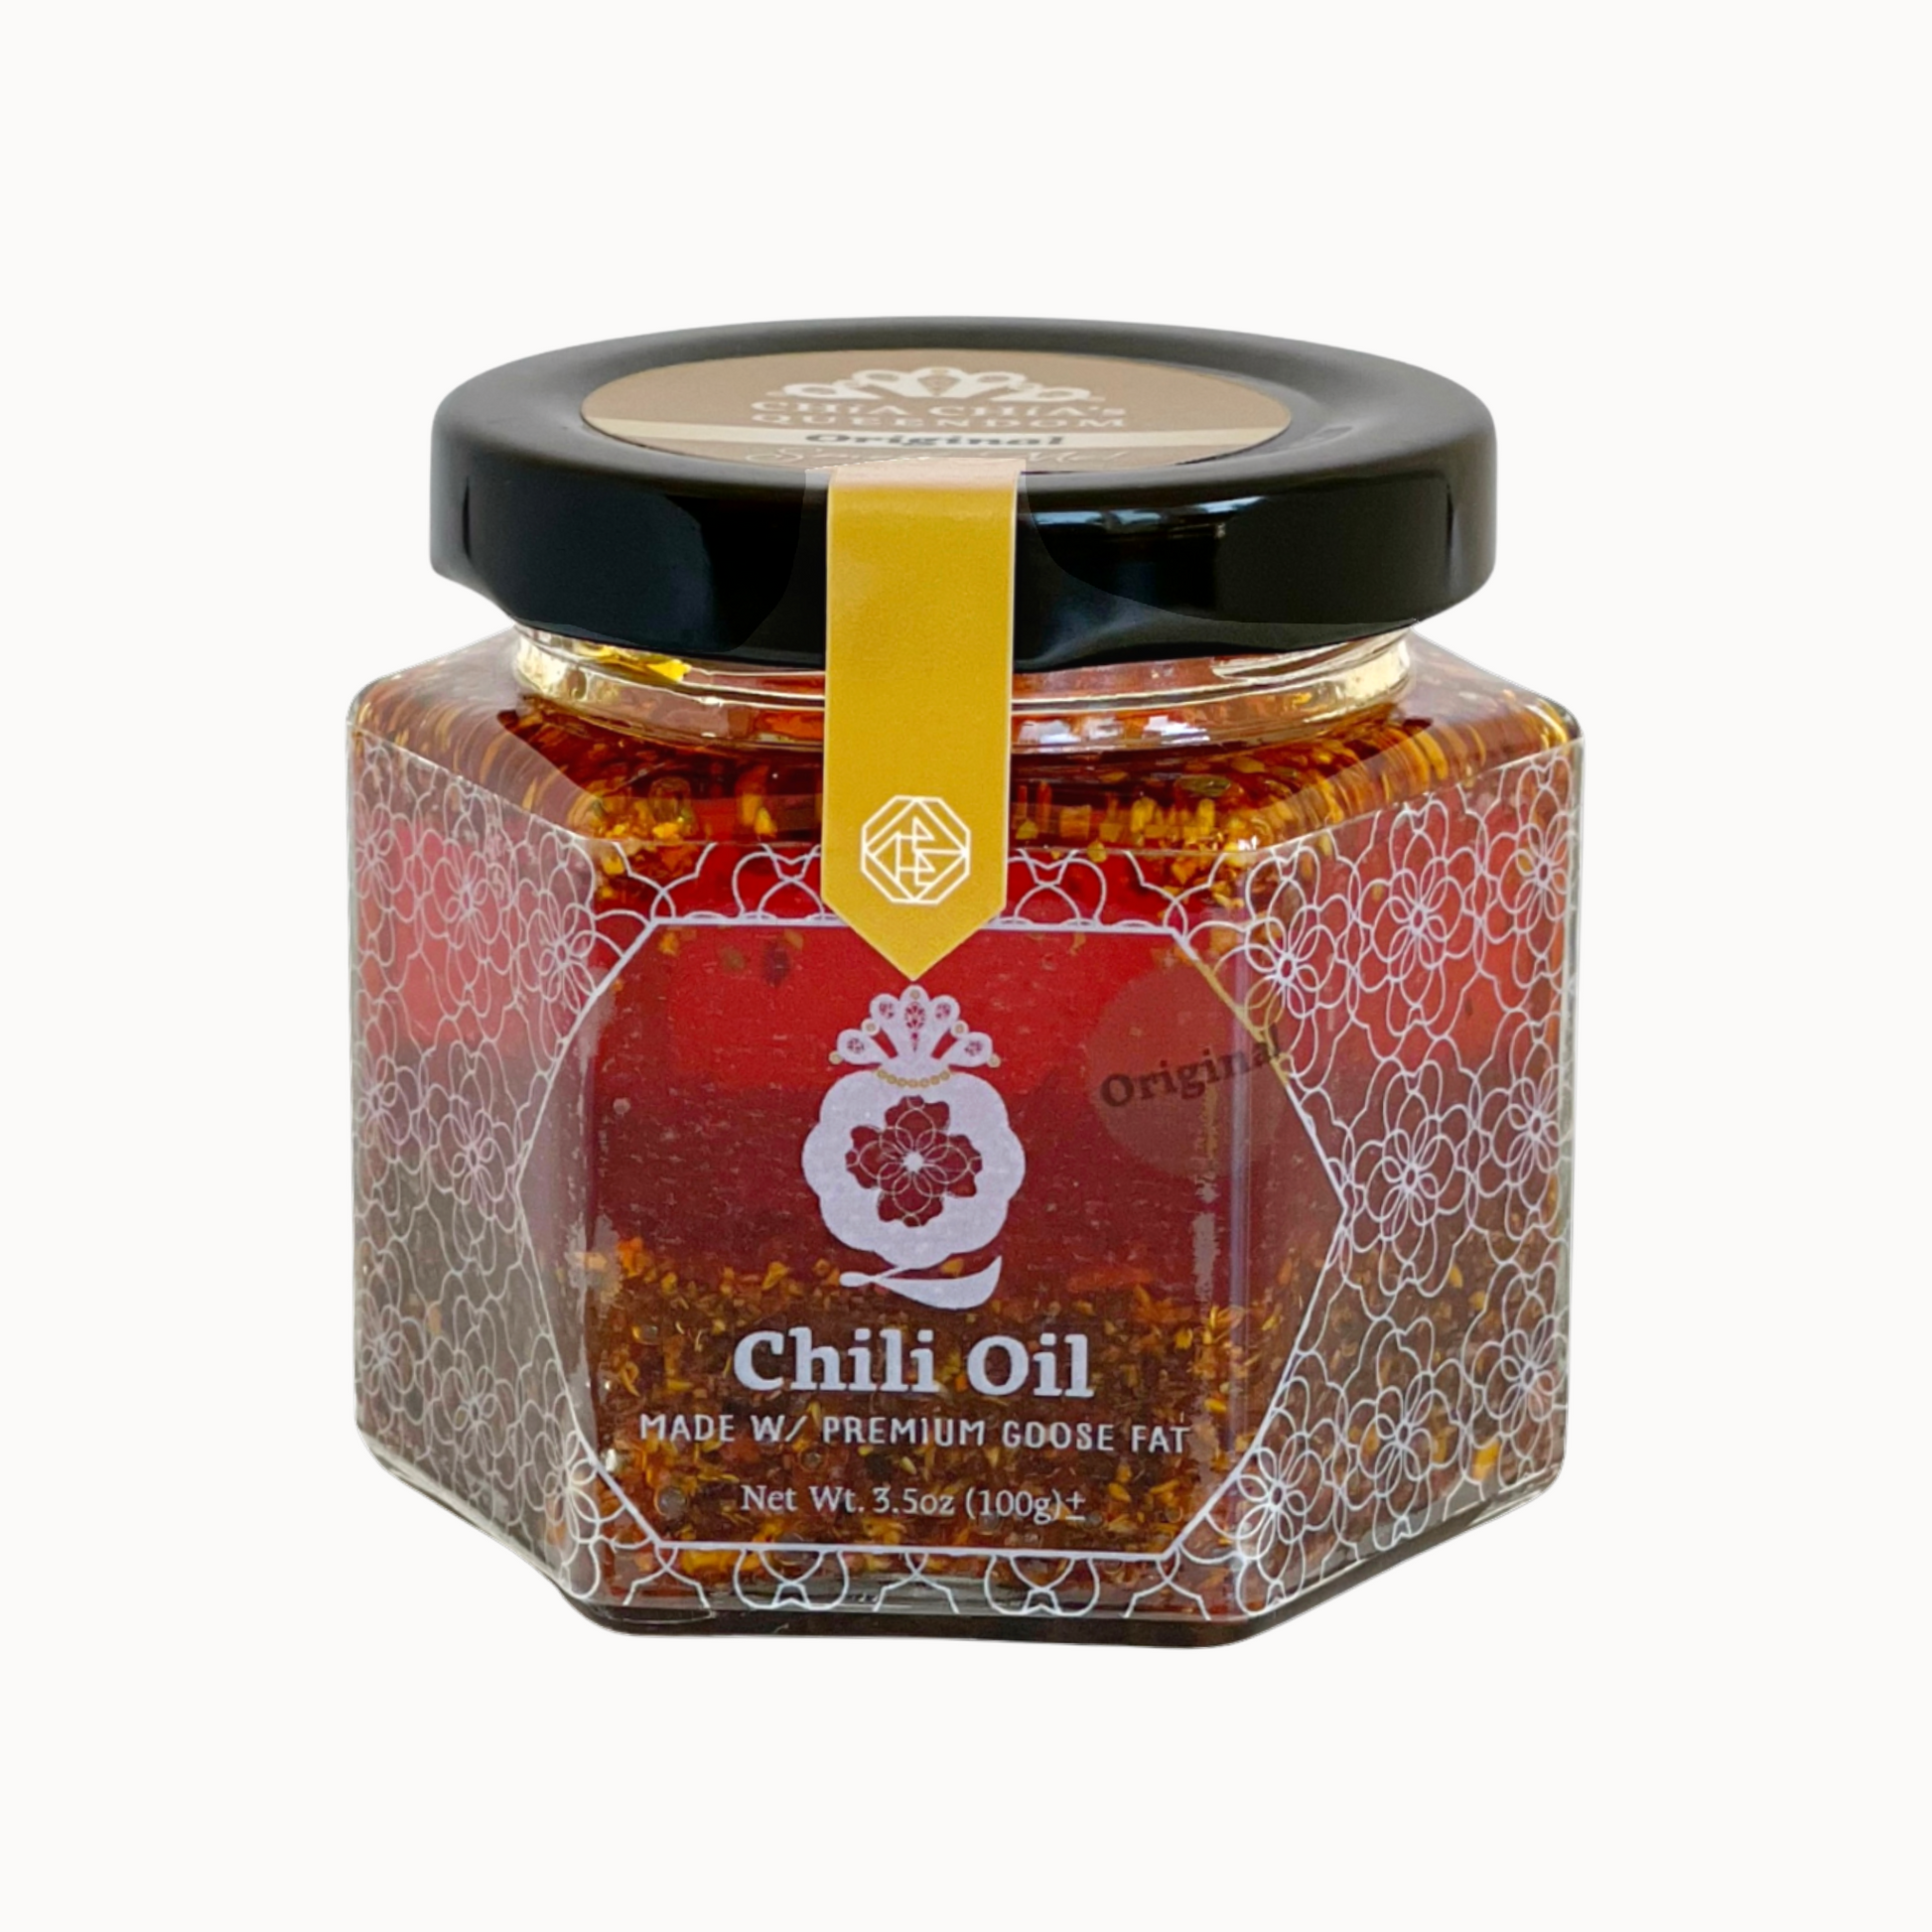 Original Chili Oil made with Premium Goose Fat 100g – ChiaChia's